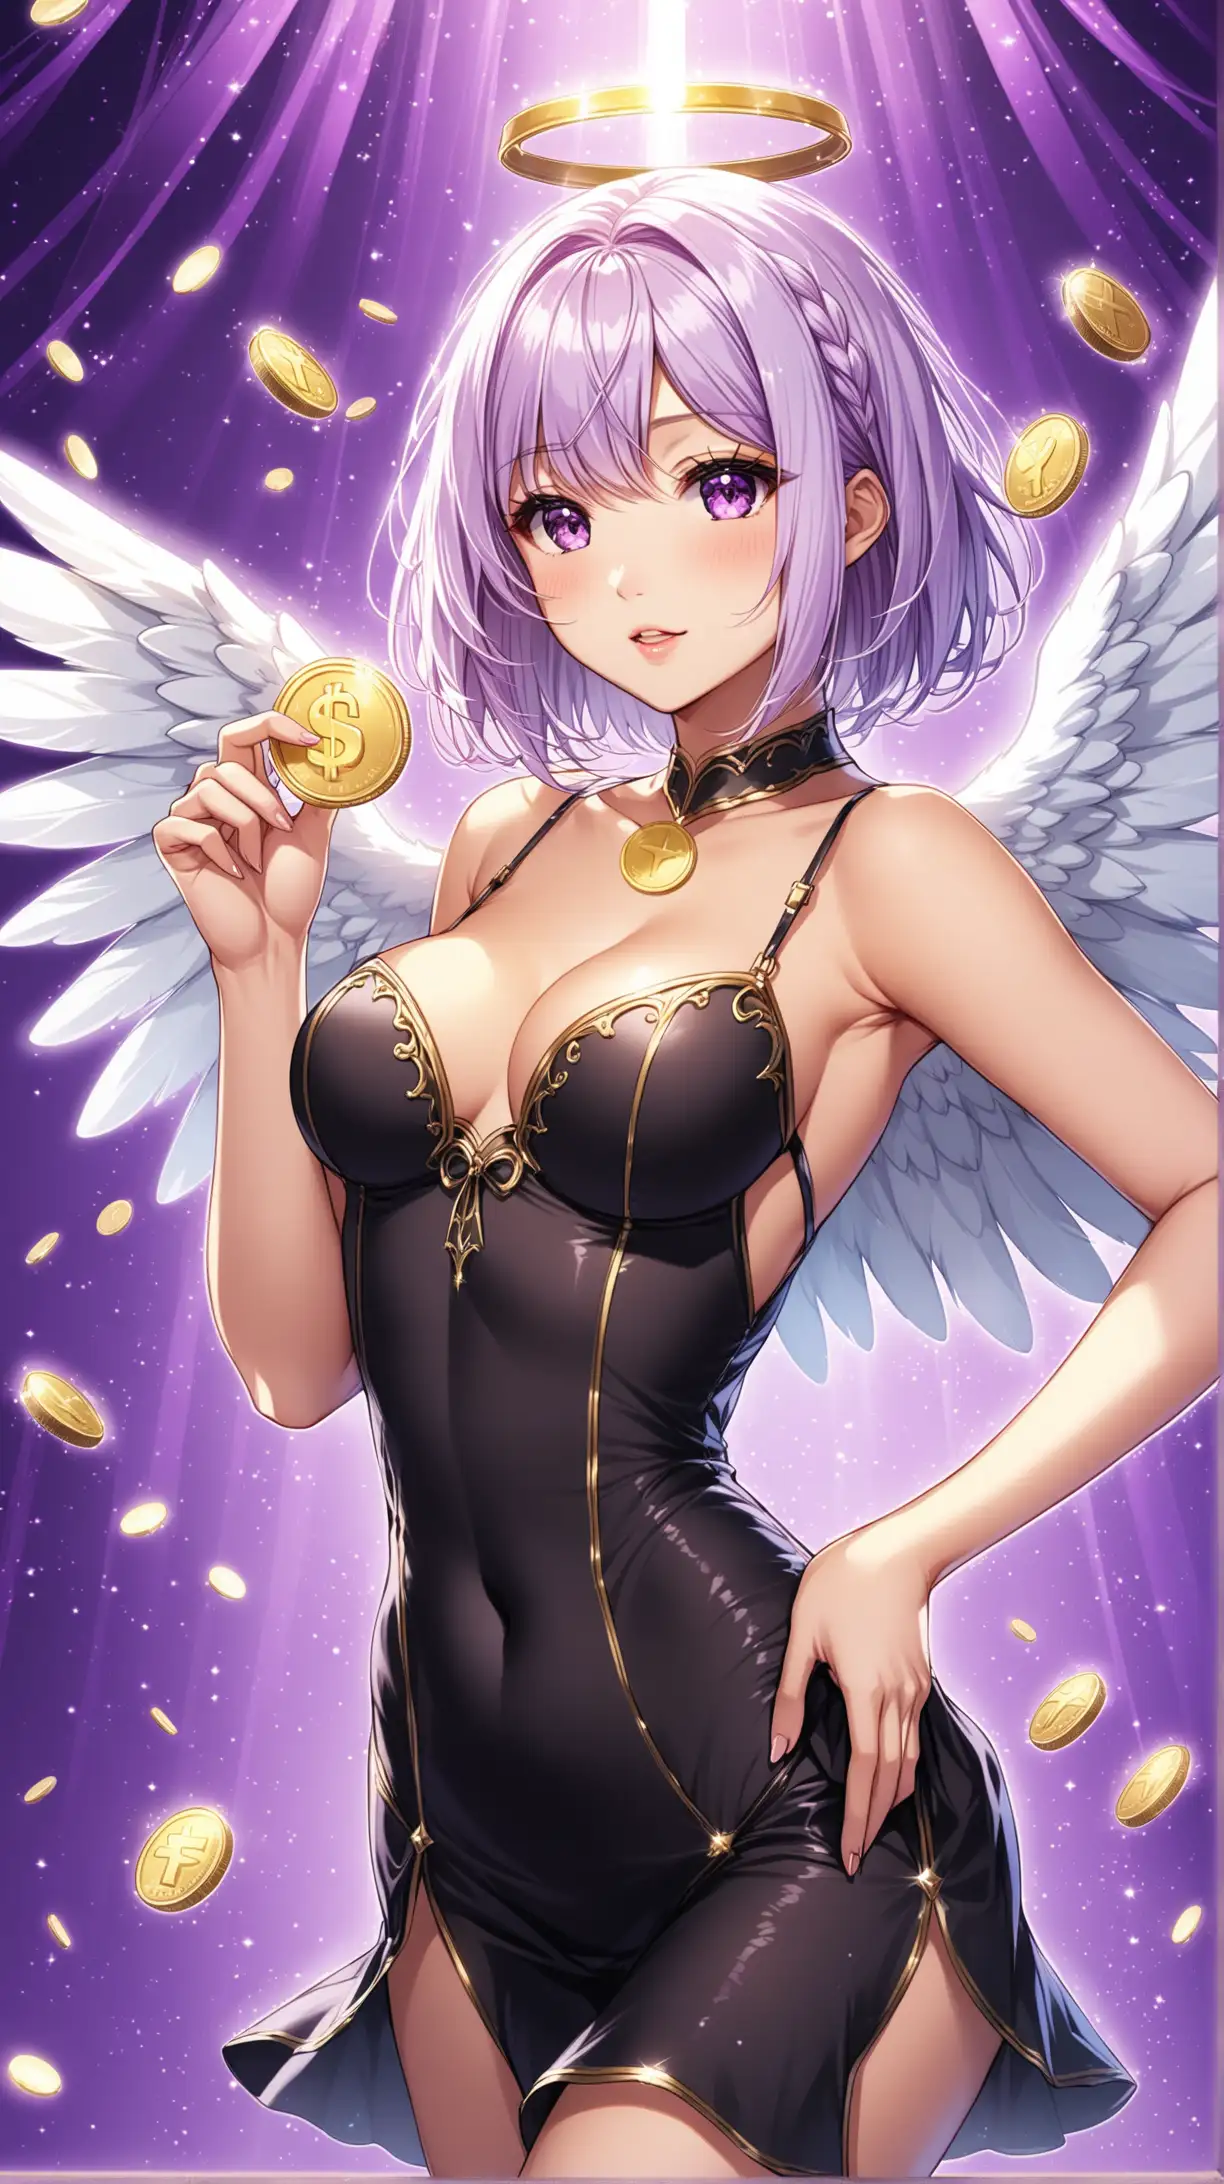 Sexy women carry coin , angel costume, playful, light purple medium hair, dark short sexy dress, fantastic background .